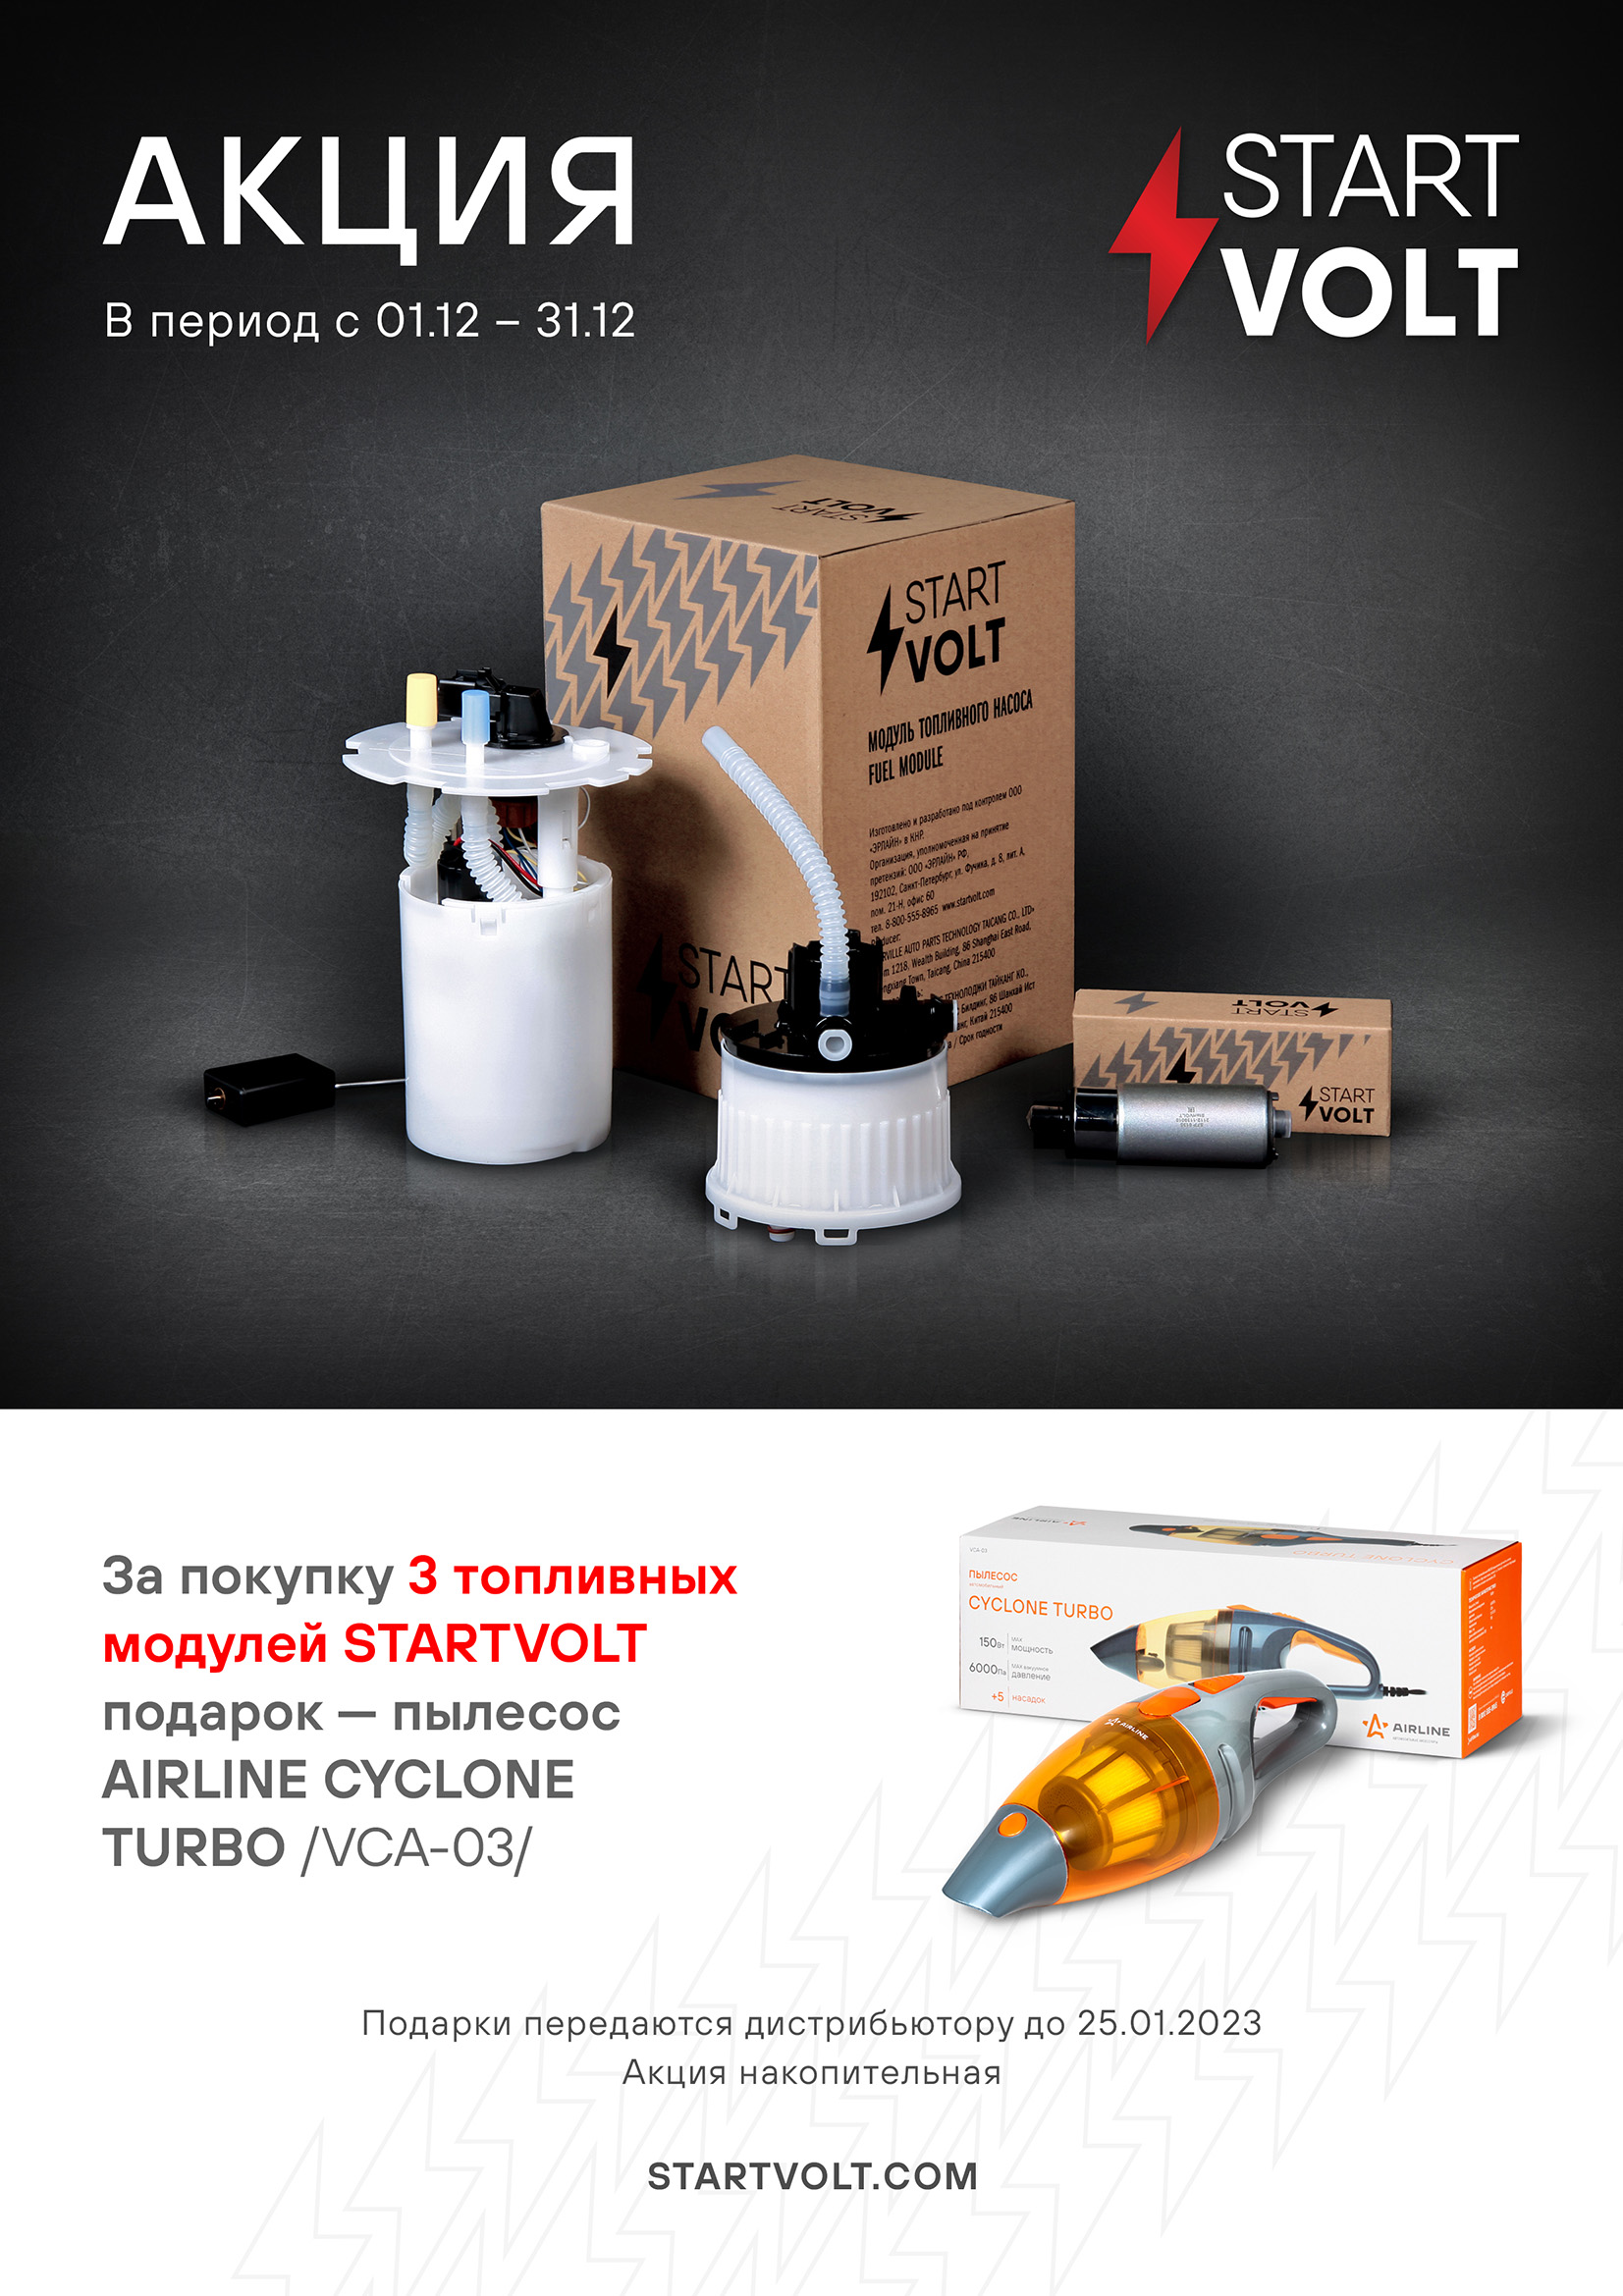 Подарок пылесос Airline Cyclone Turbo